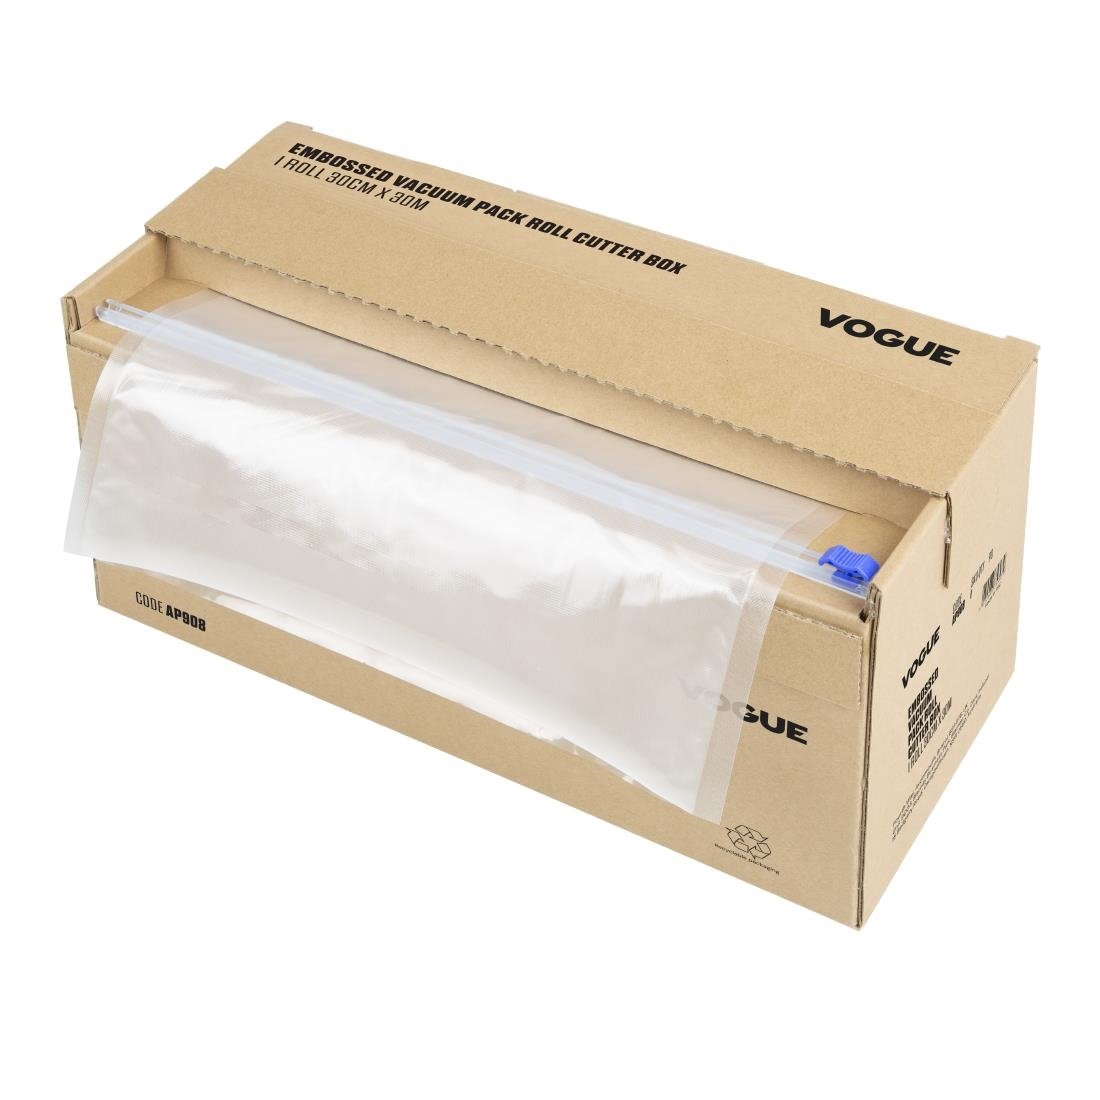 Vogue vacuümverpakkingsrol met snijbox (reliëf) 300 mm breed